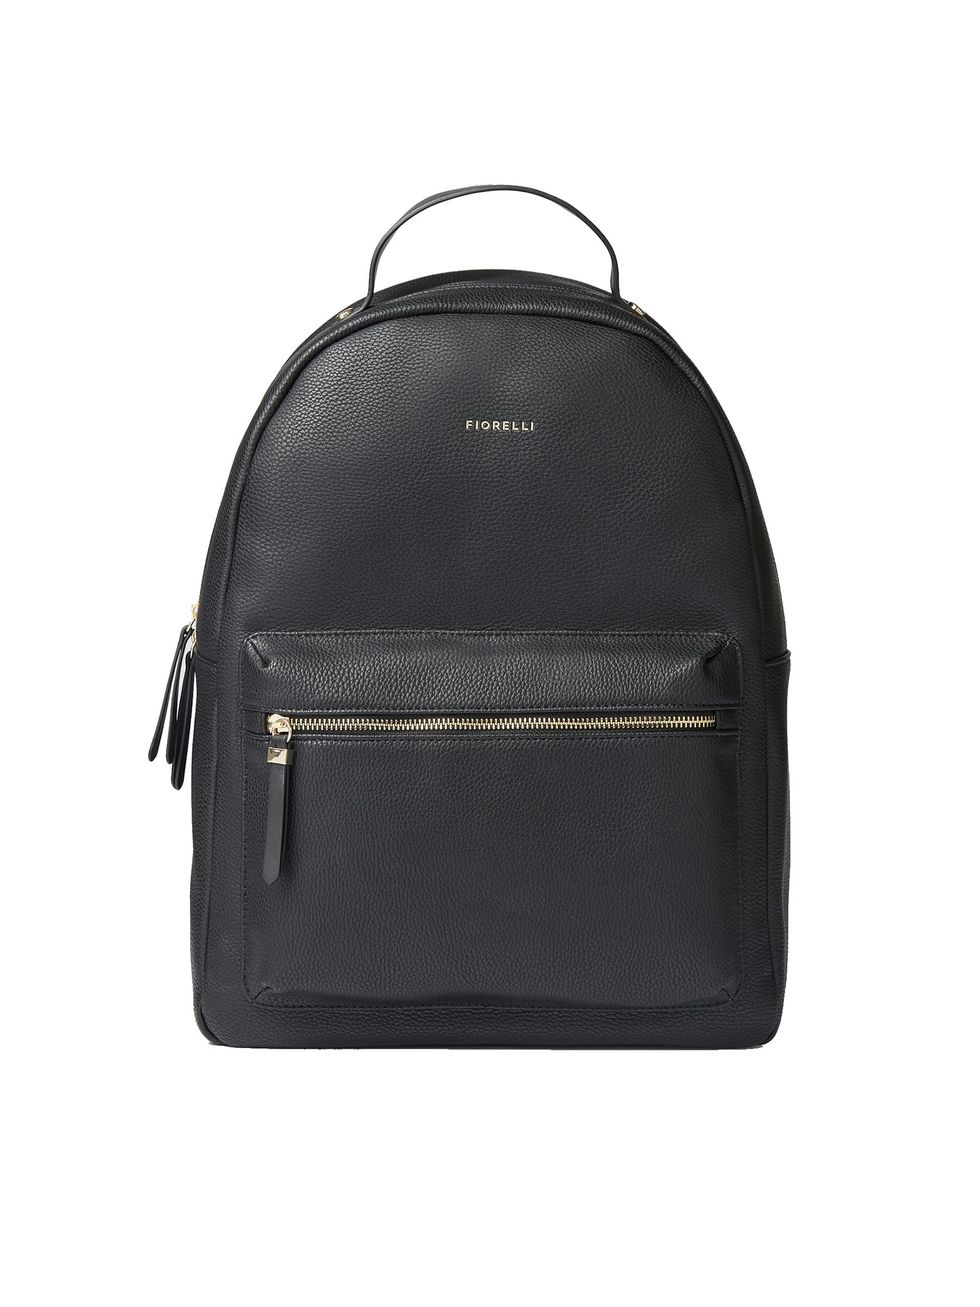 Fiorelli Anouk Backpack Black One Size